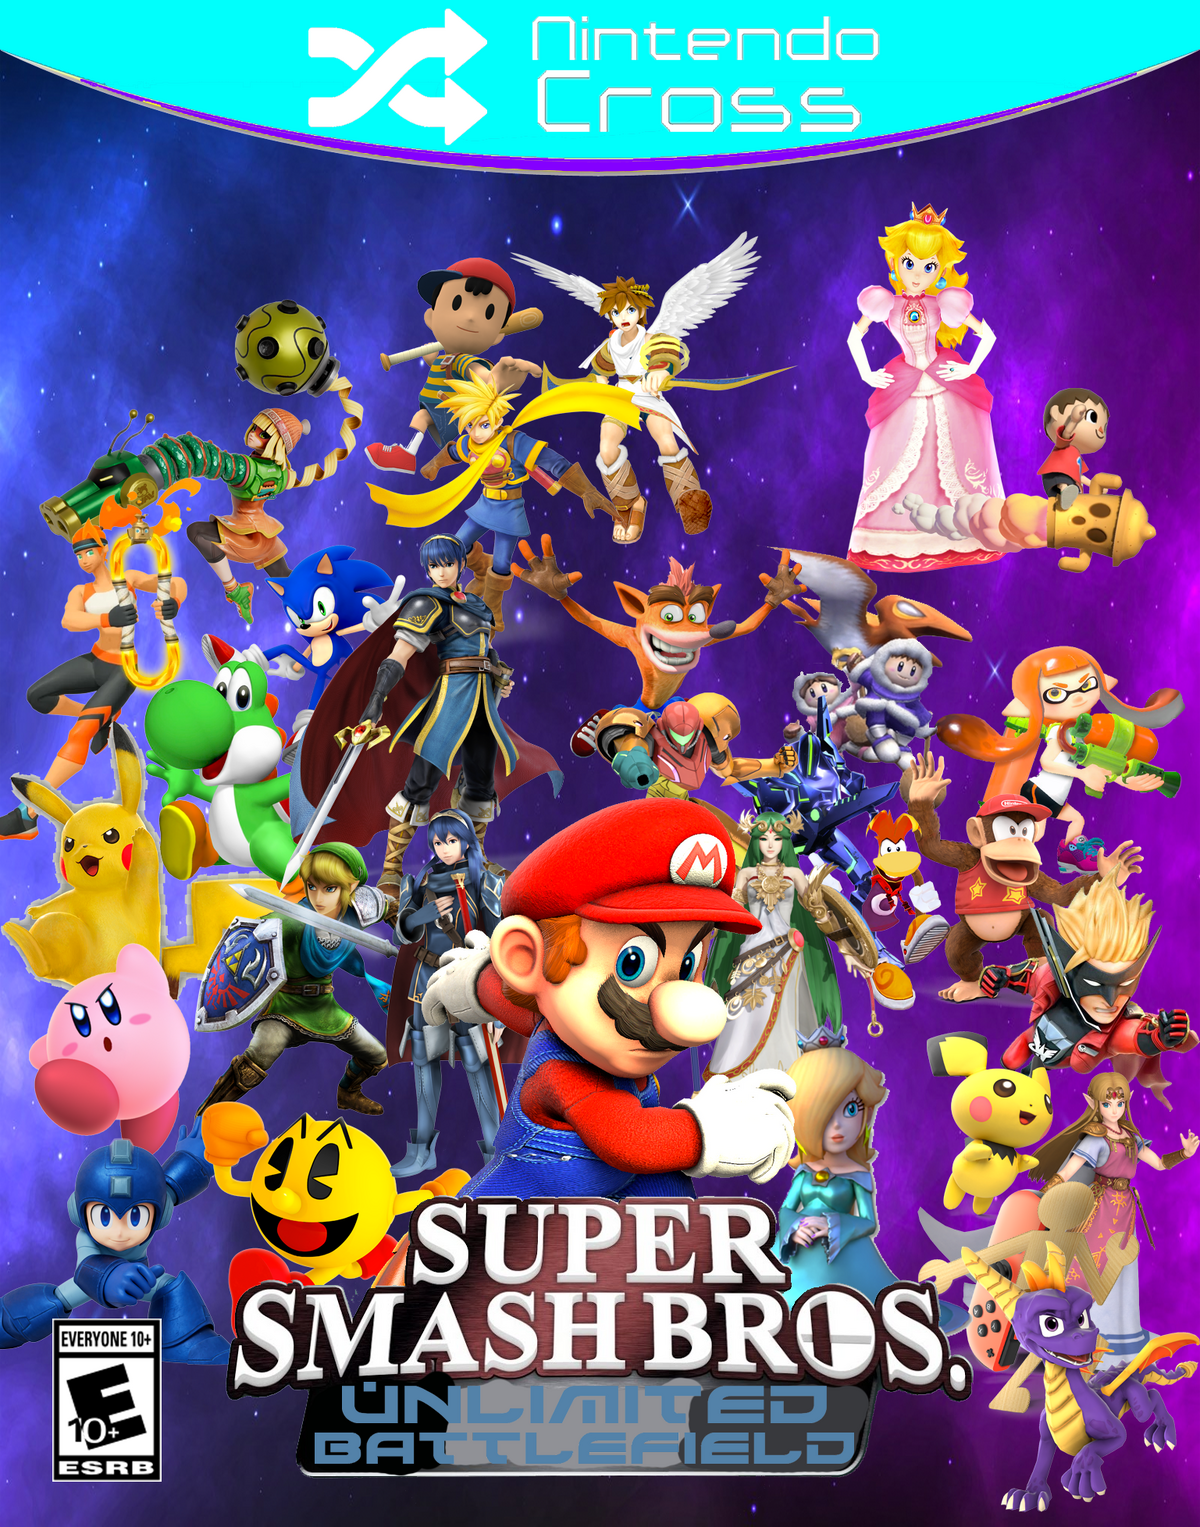 Crash (Super Smash Bros. Infinite), Super Smash Bros. Infinite Wiki